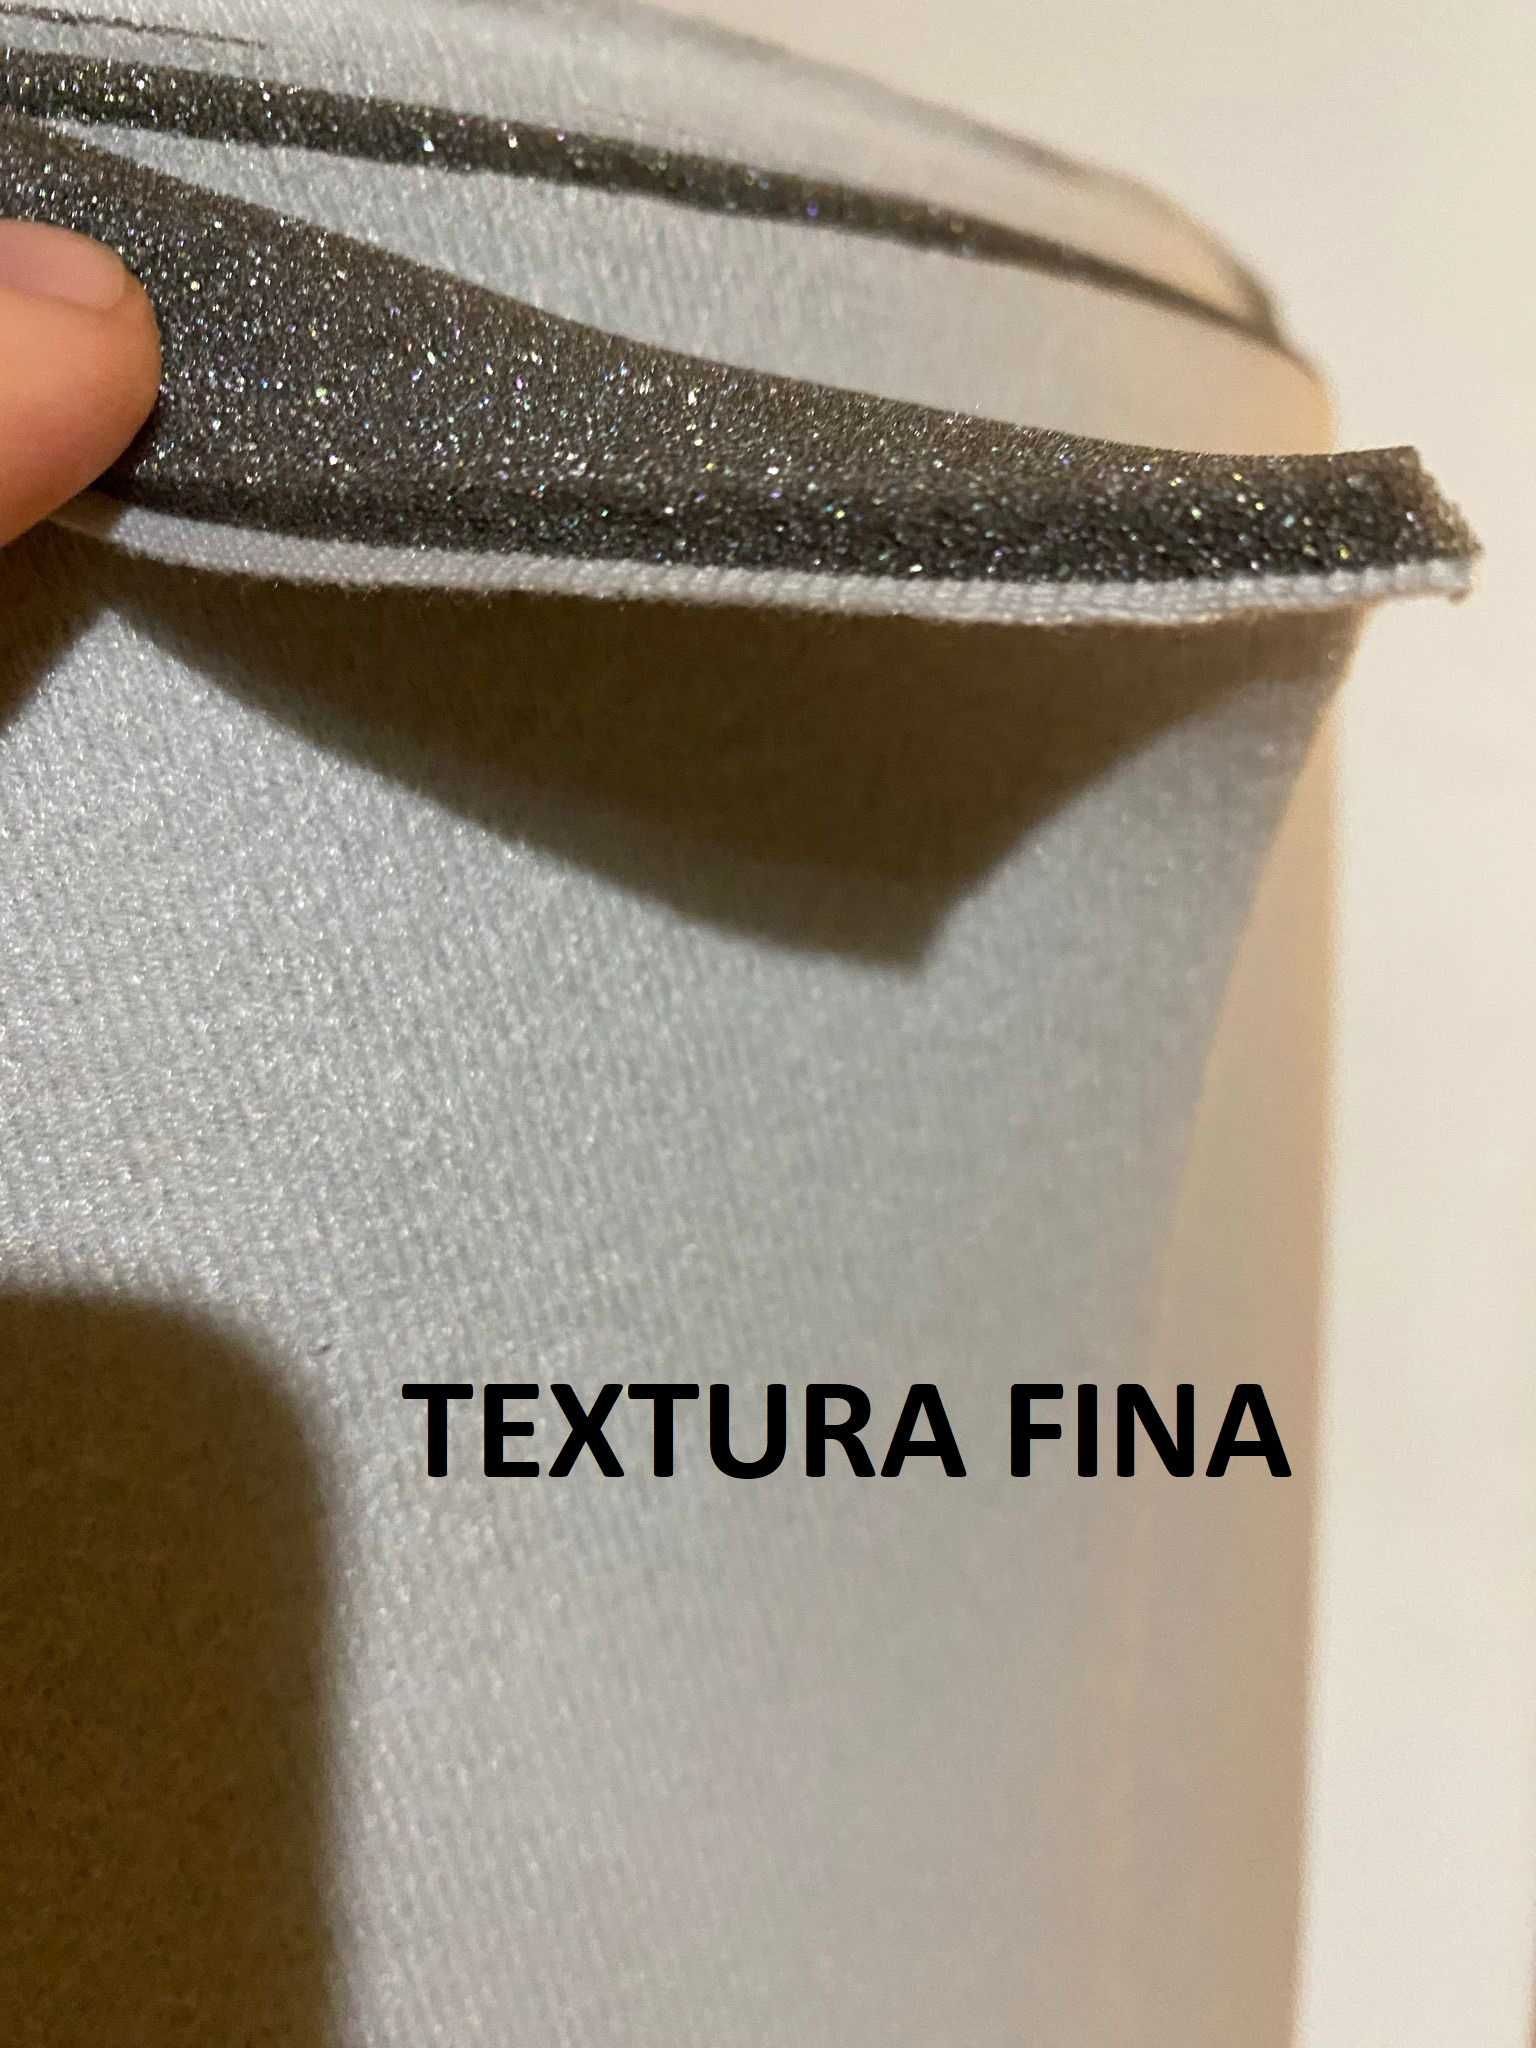 Material plafon auto GRI INCHIS / GRI DESCHIS TEXTURA FINA buretat